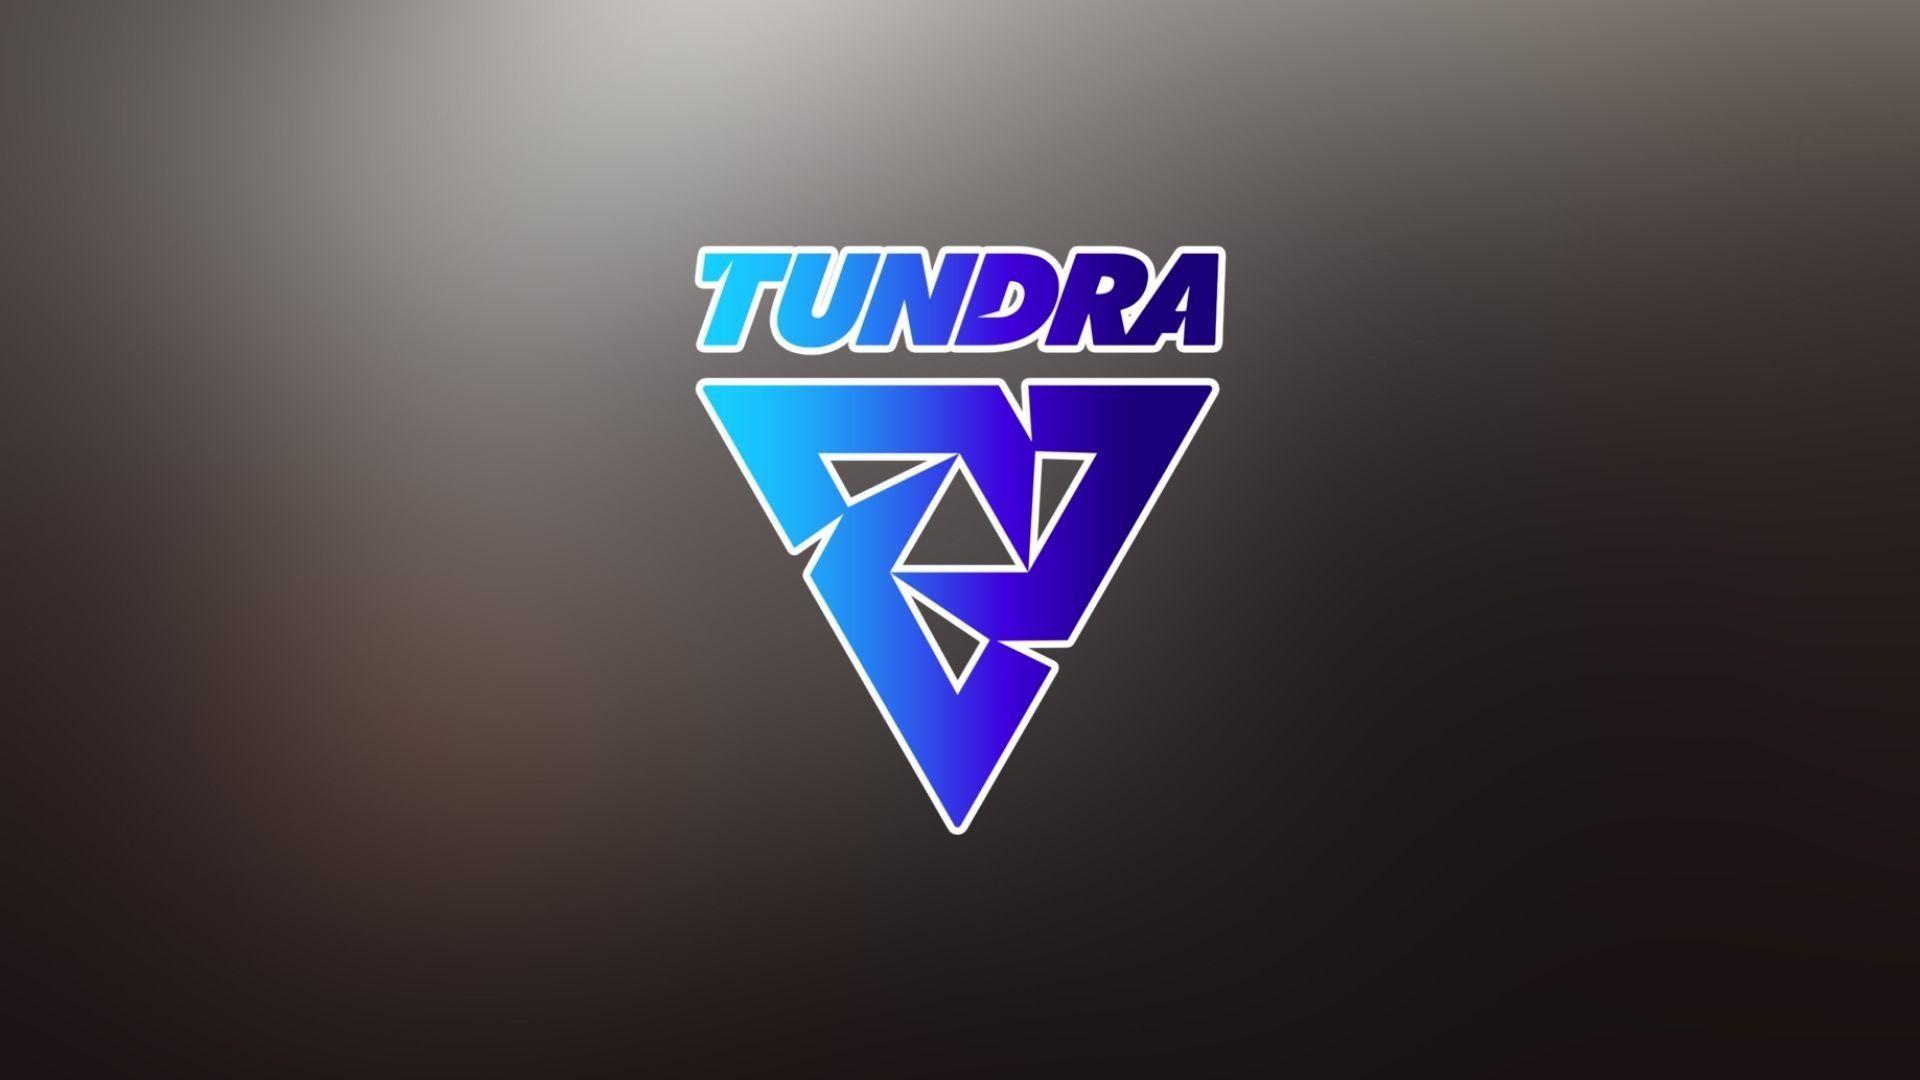 Tundra обыграла Deboosters на Riyadh Masters 2022